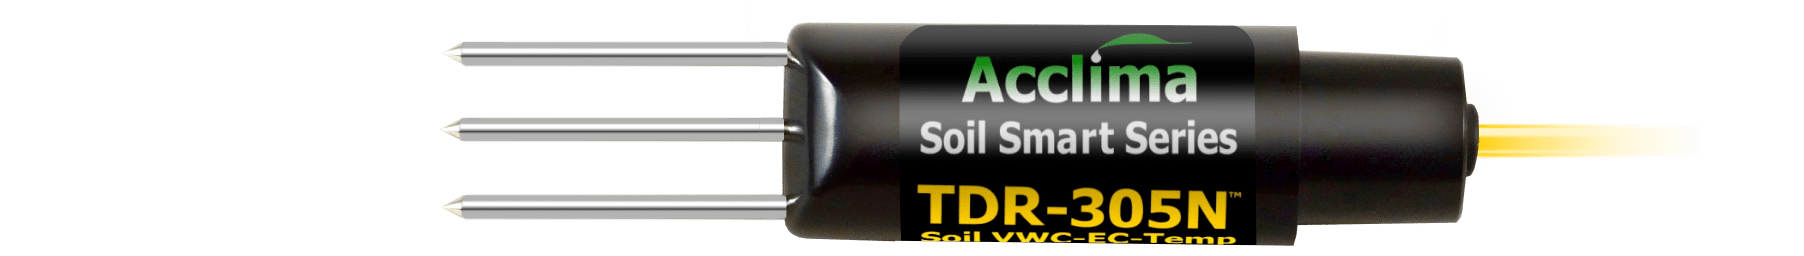 TDR-305N Soil Moisture Sensor Water Content